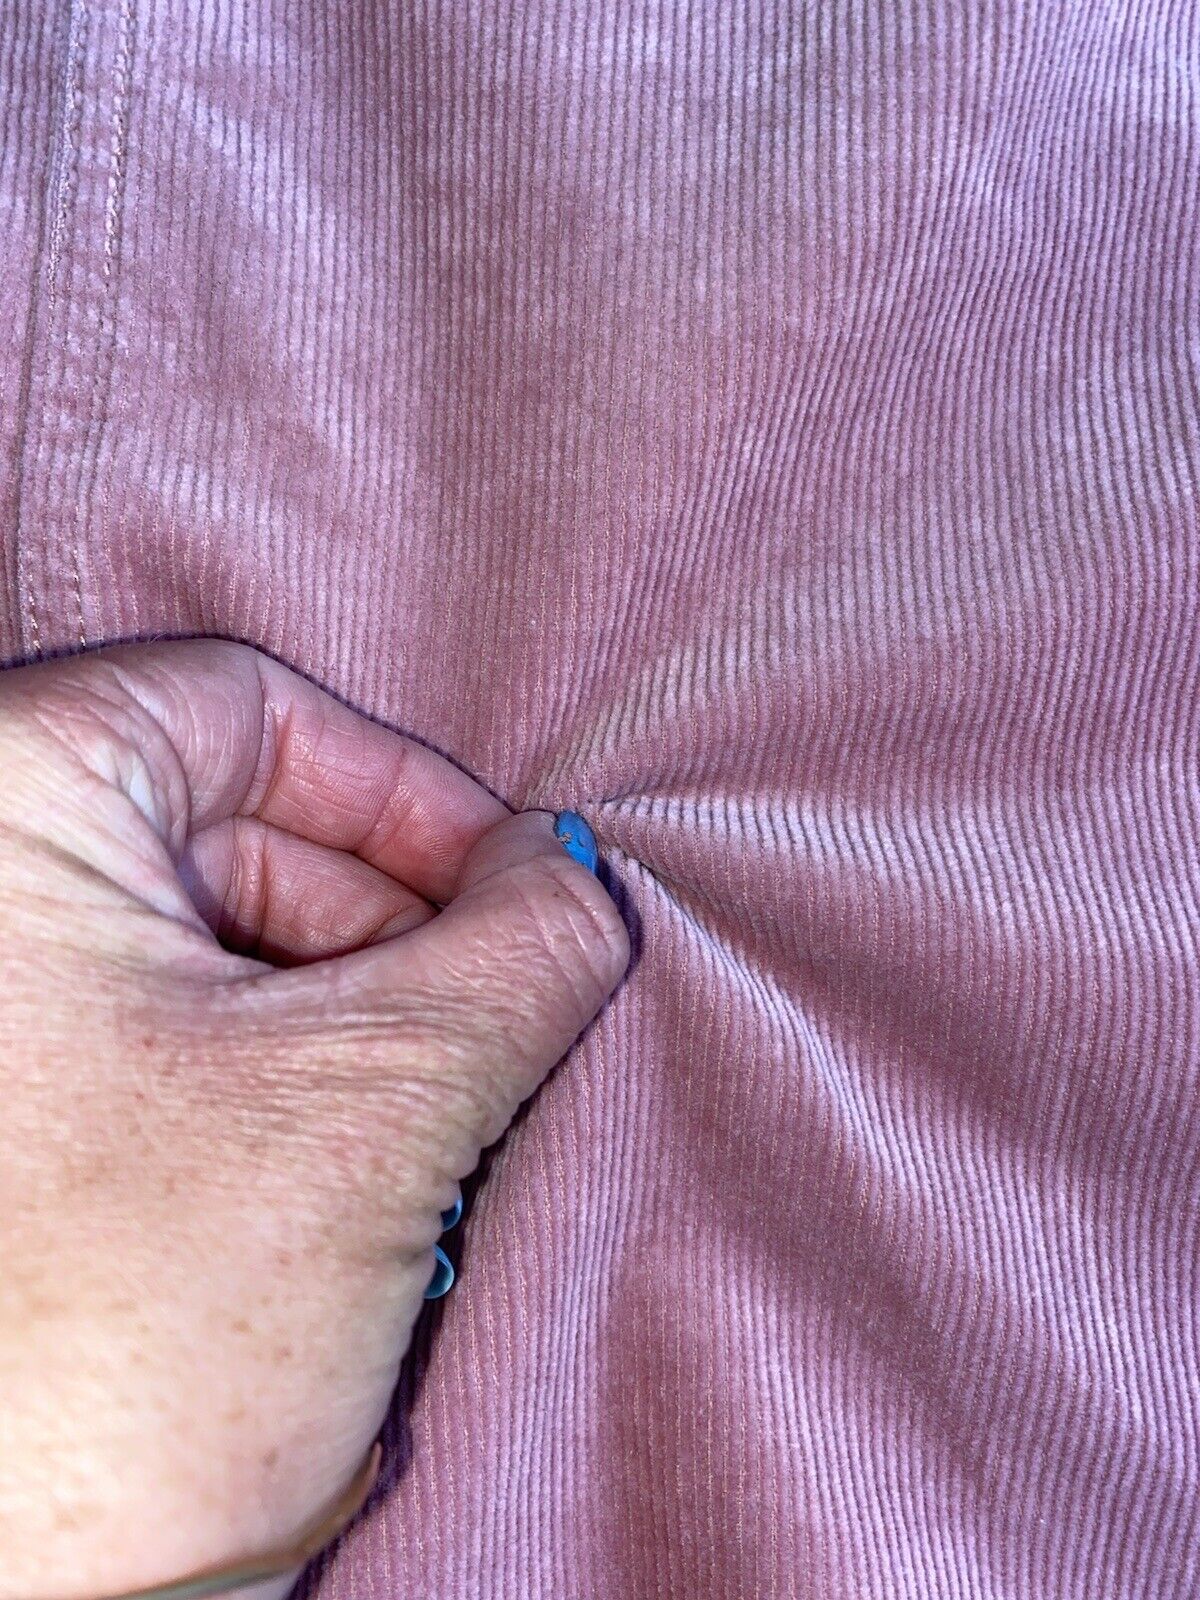 Pink Corduroy Mini Skirt - Unbranded - Women’s Small